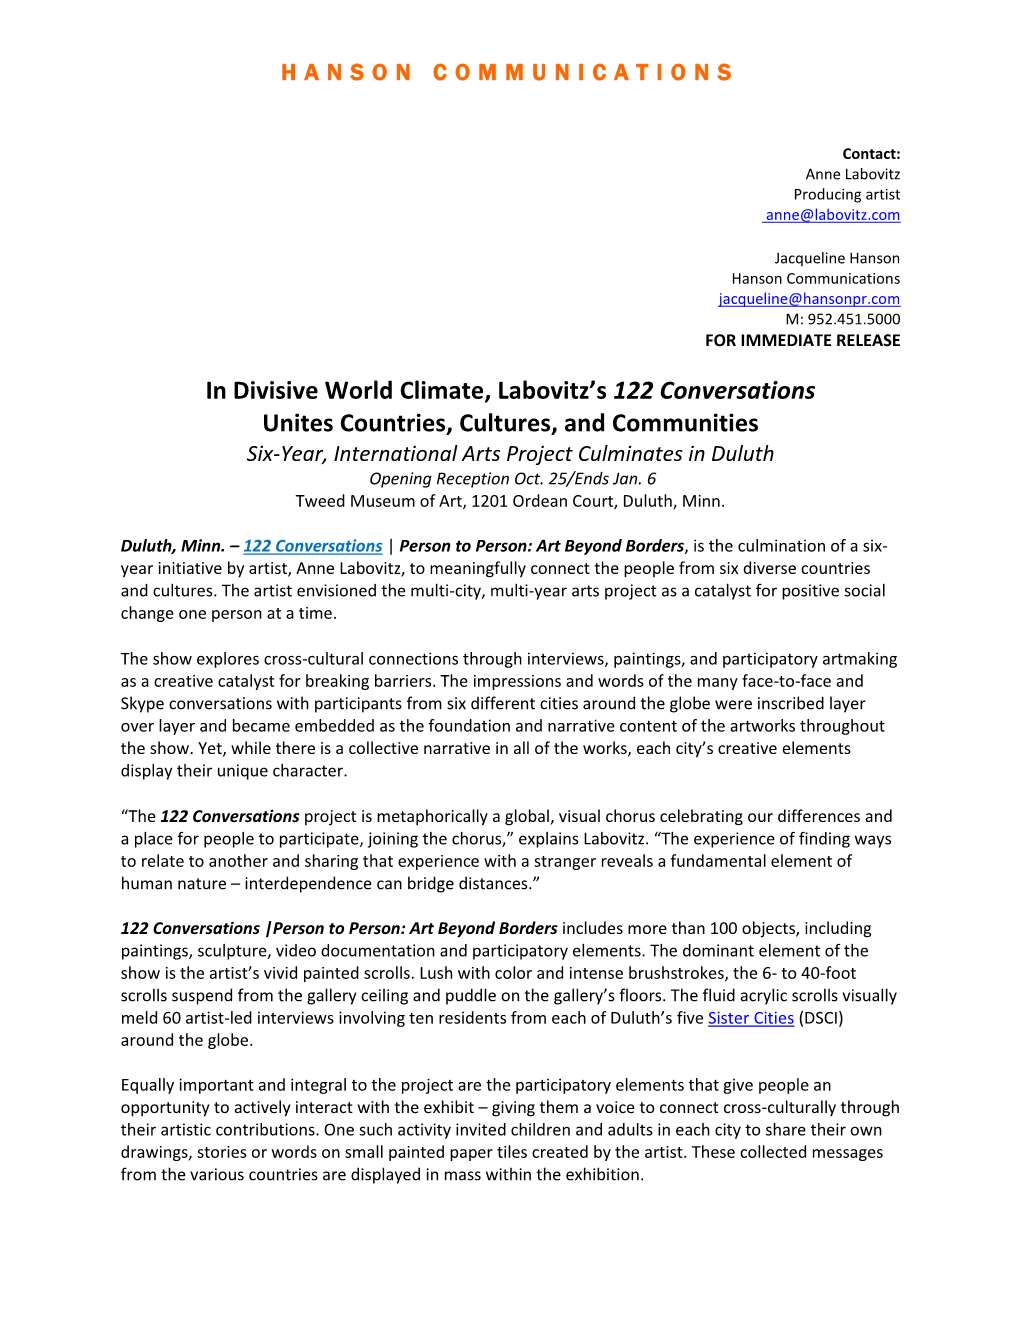 In Divisive World Climate, Labovitz's 122 Conversations Unites